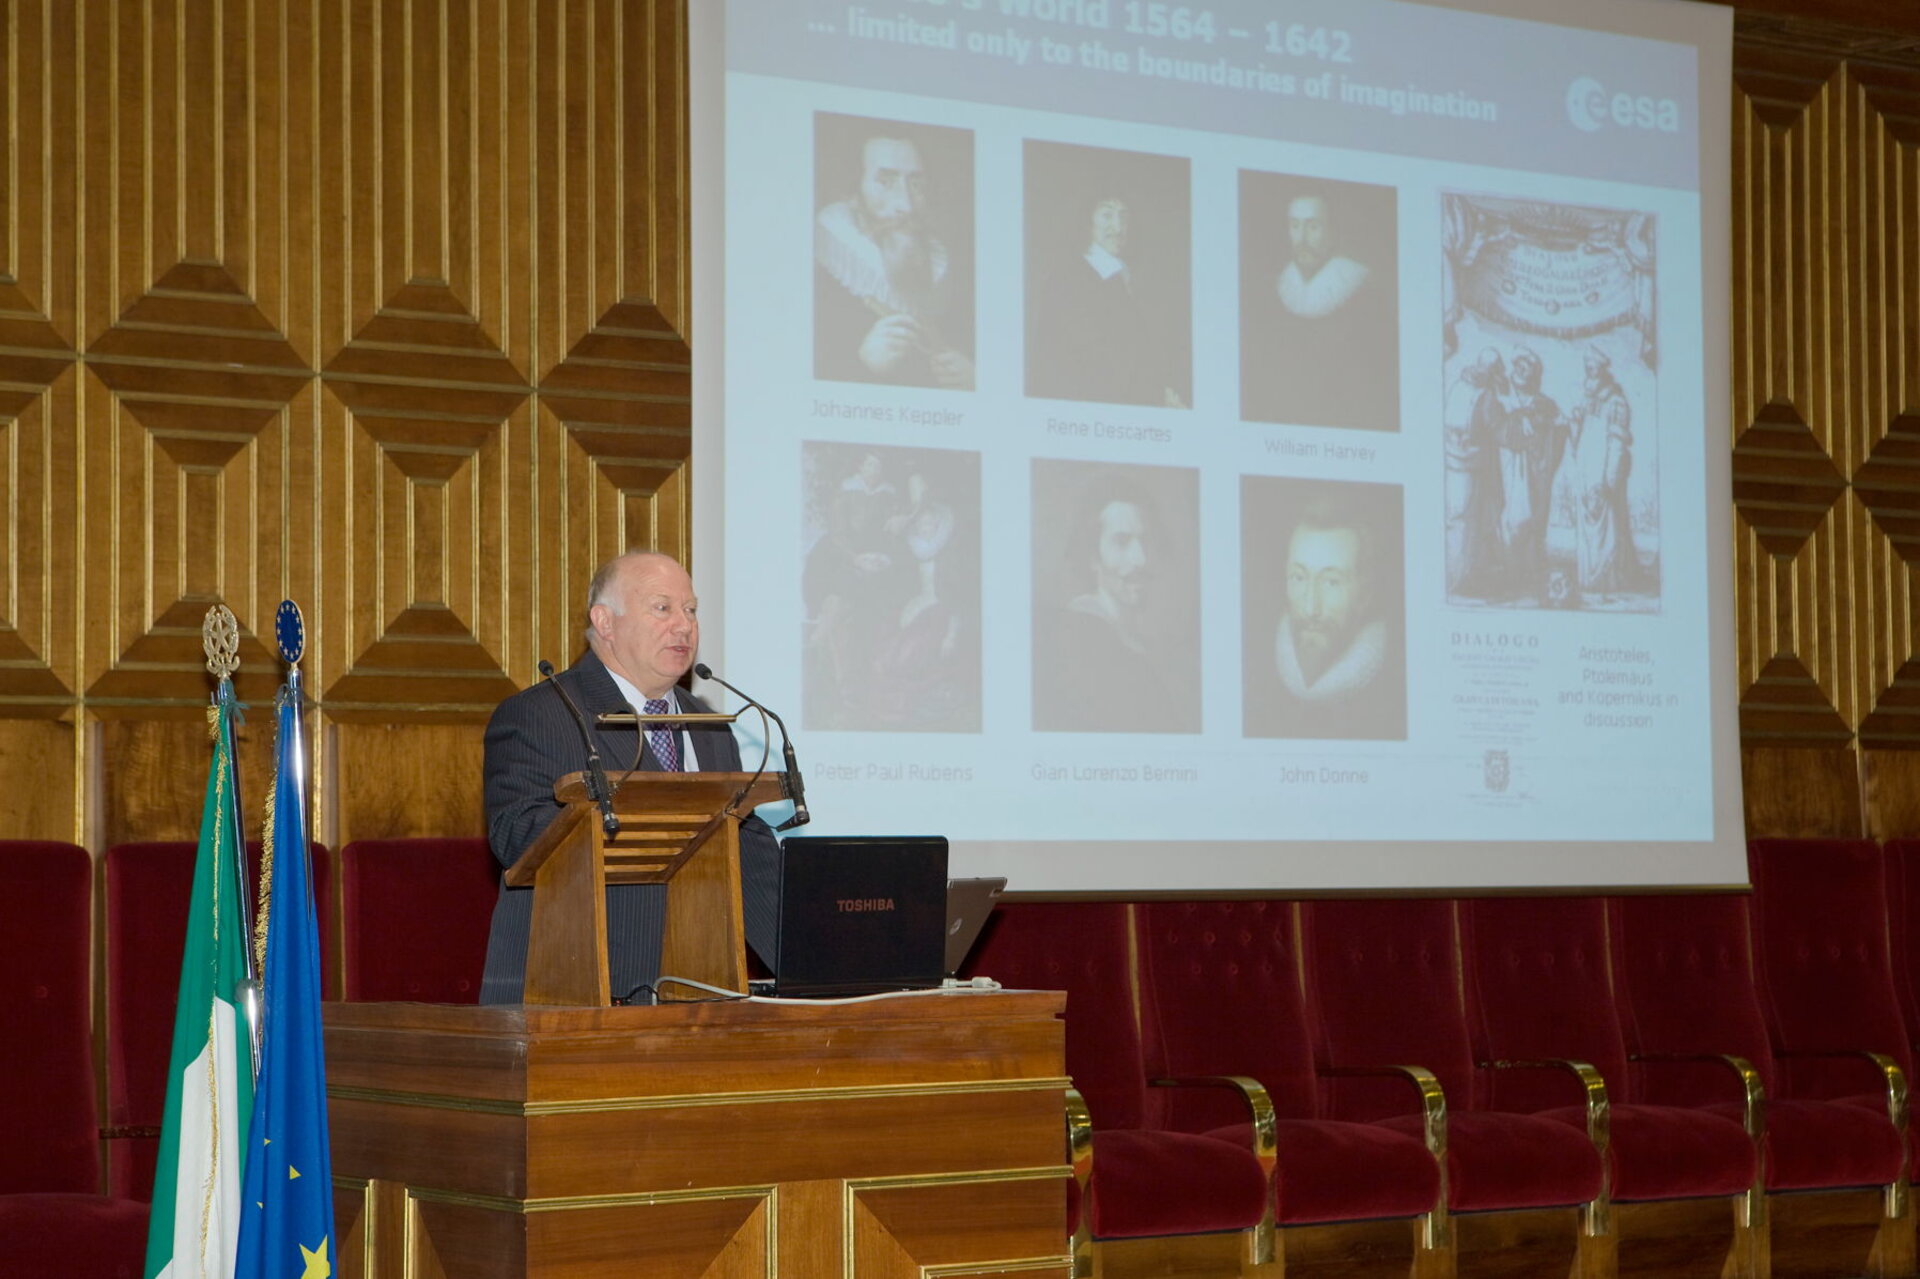 Opening Address by Guenter Hein (ESA)